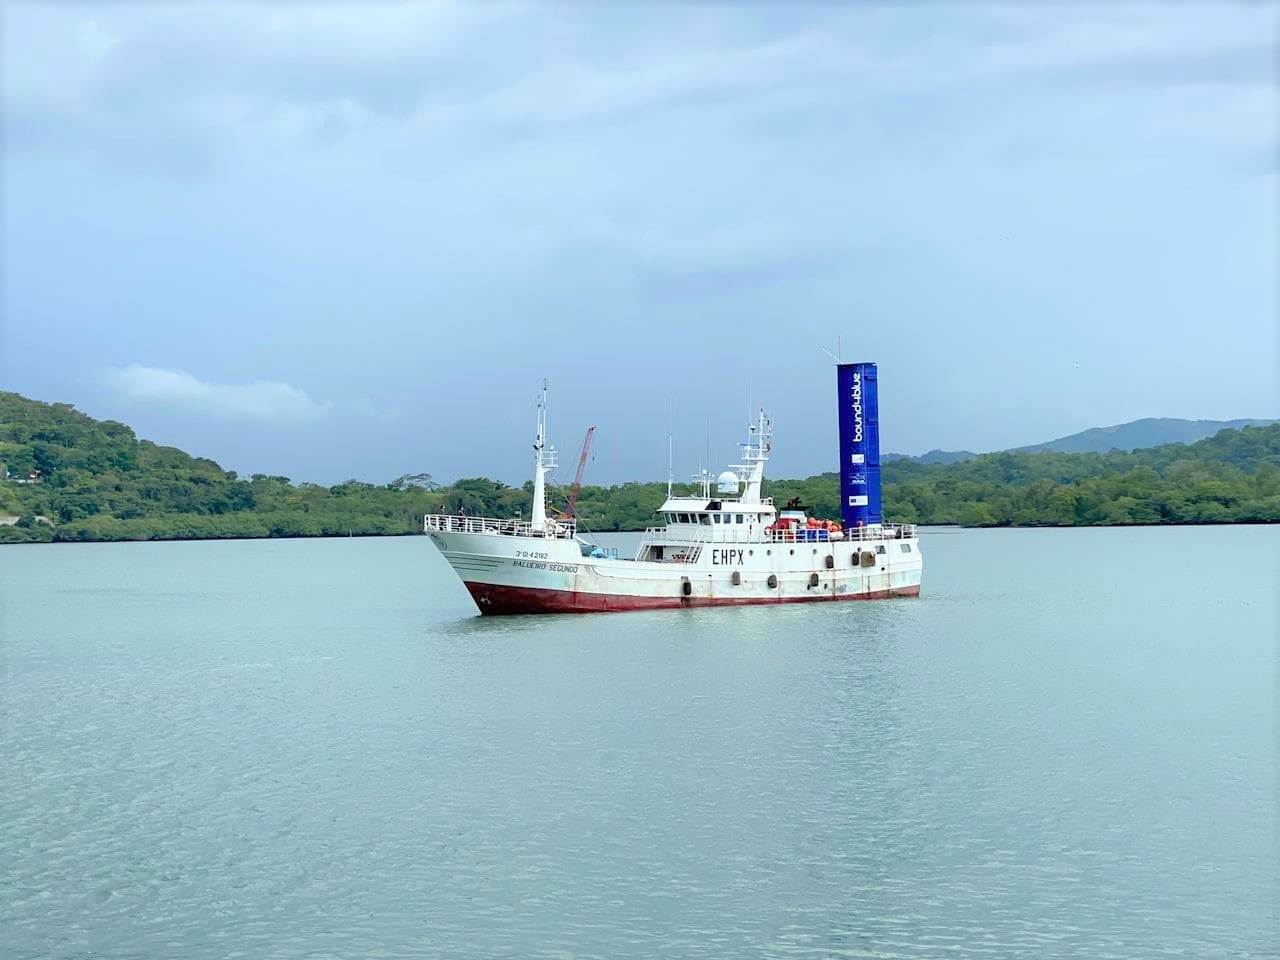 bound4blue installs its eSAIL system on the fishing vessel “Balueiro Segundo”